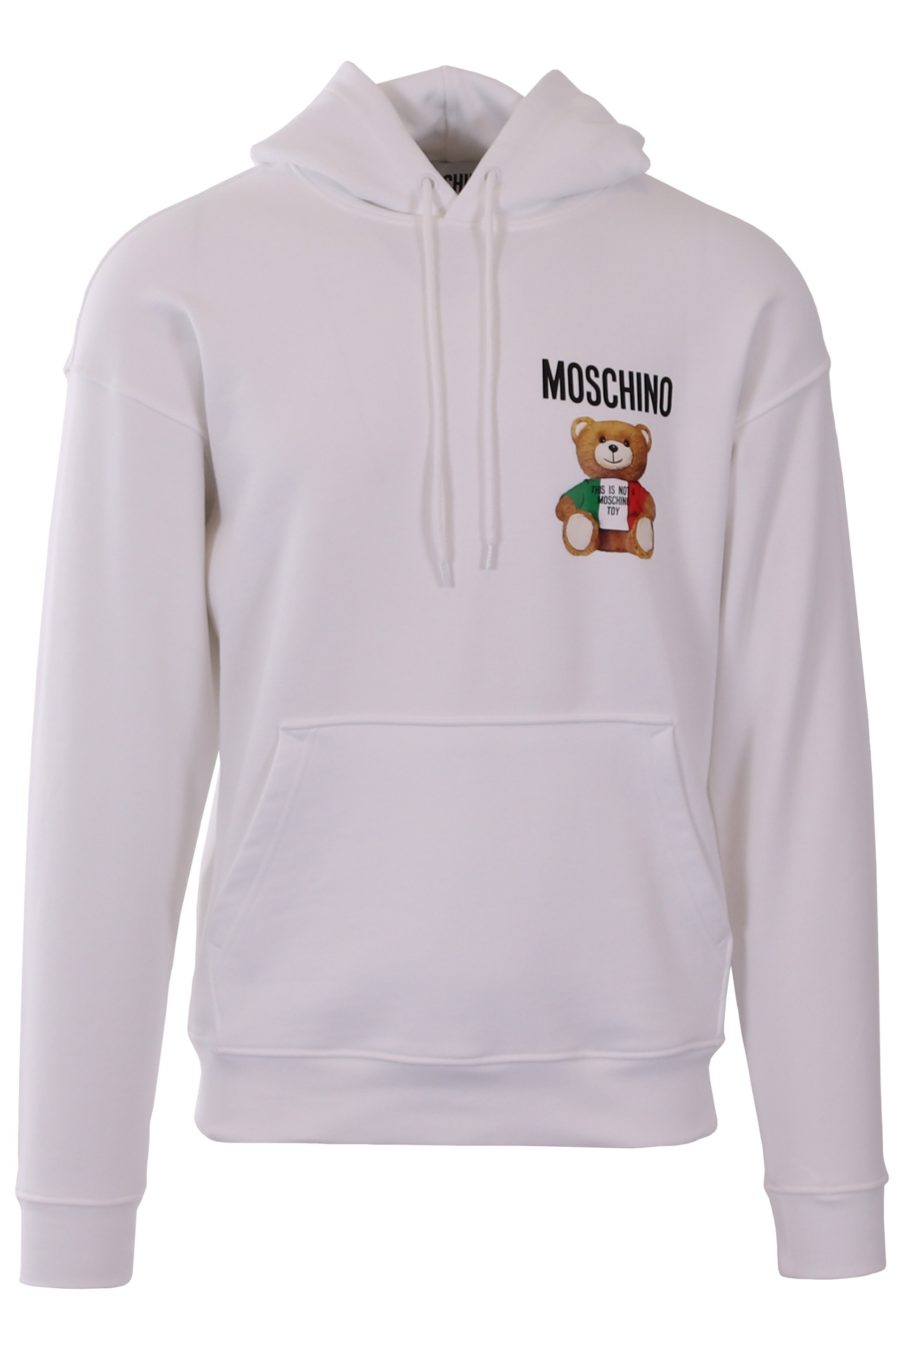 Sweatshirt Moschino Couture weißer Hoodie Teddy in italienischen Farben - b1f52ac85e94671827e7c0b4c04e2d02823b19e4